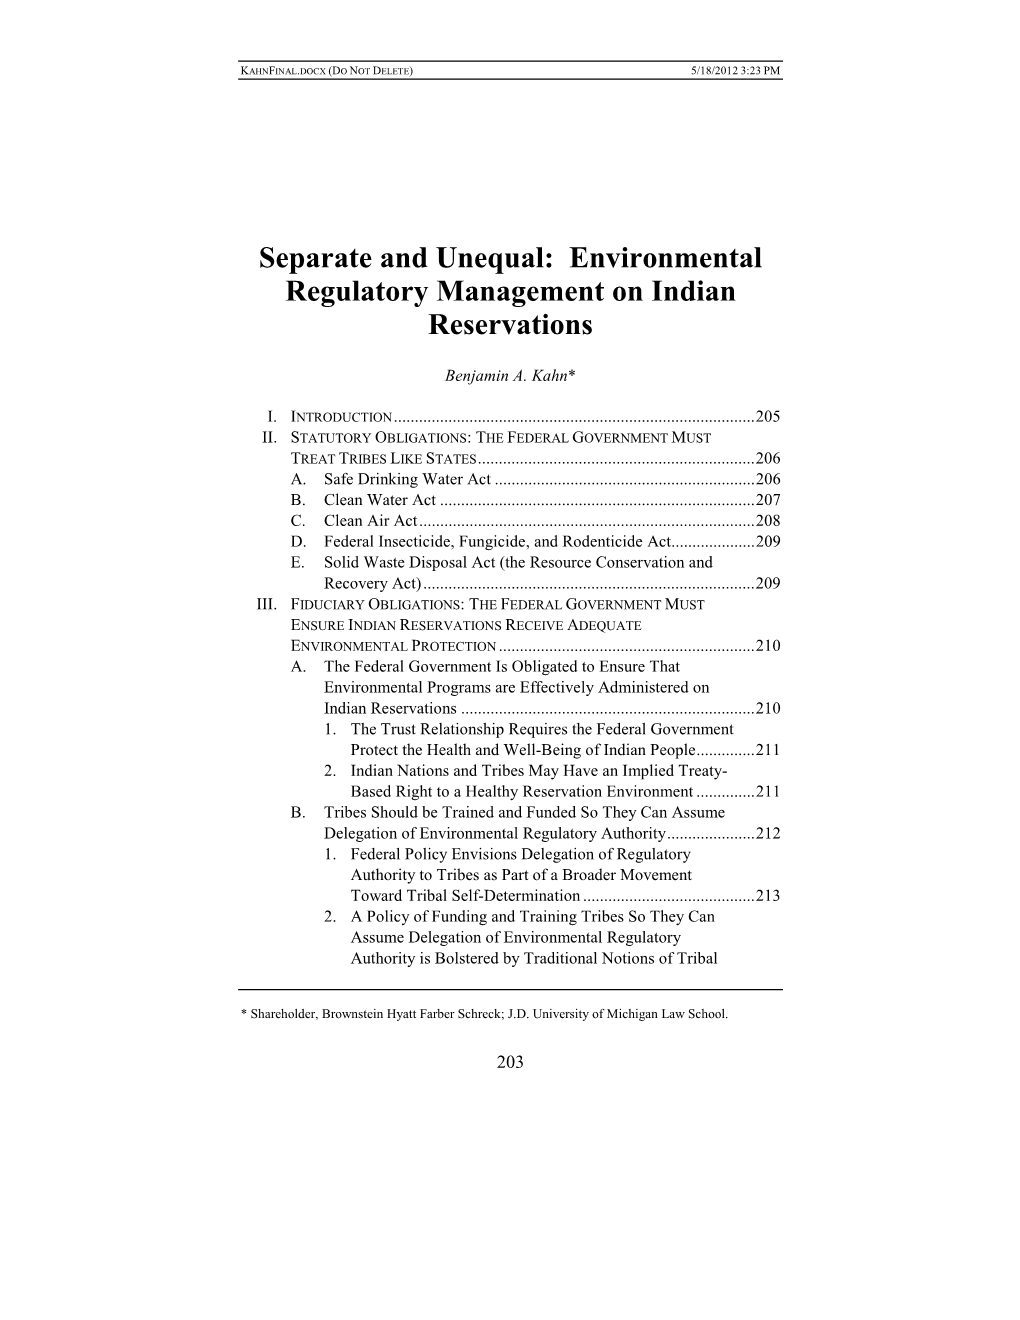 Environmental Regulatory Management on Indian Reservations